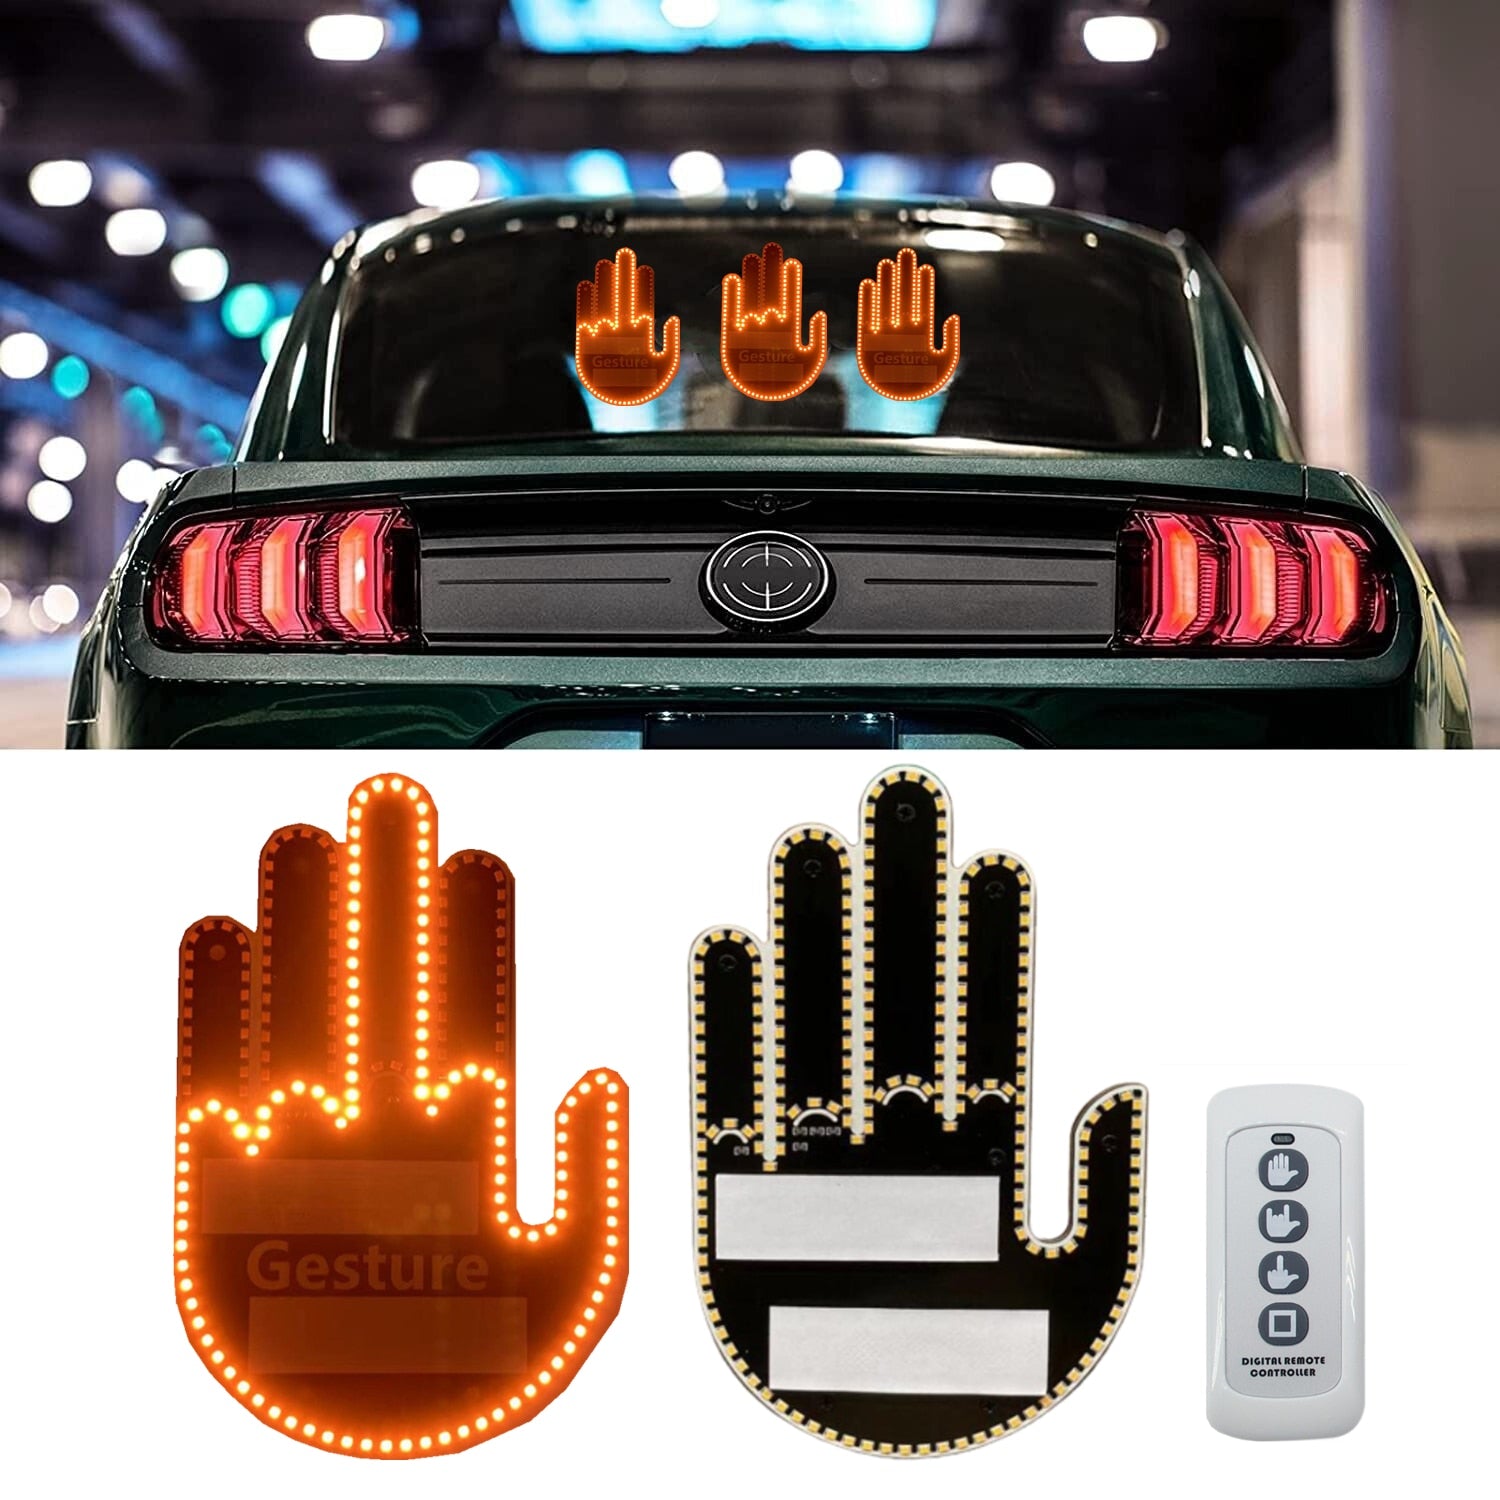 LED Hand Auto, Lustiges Finger Licht